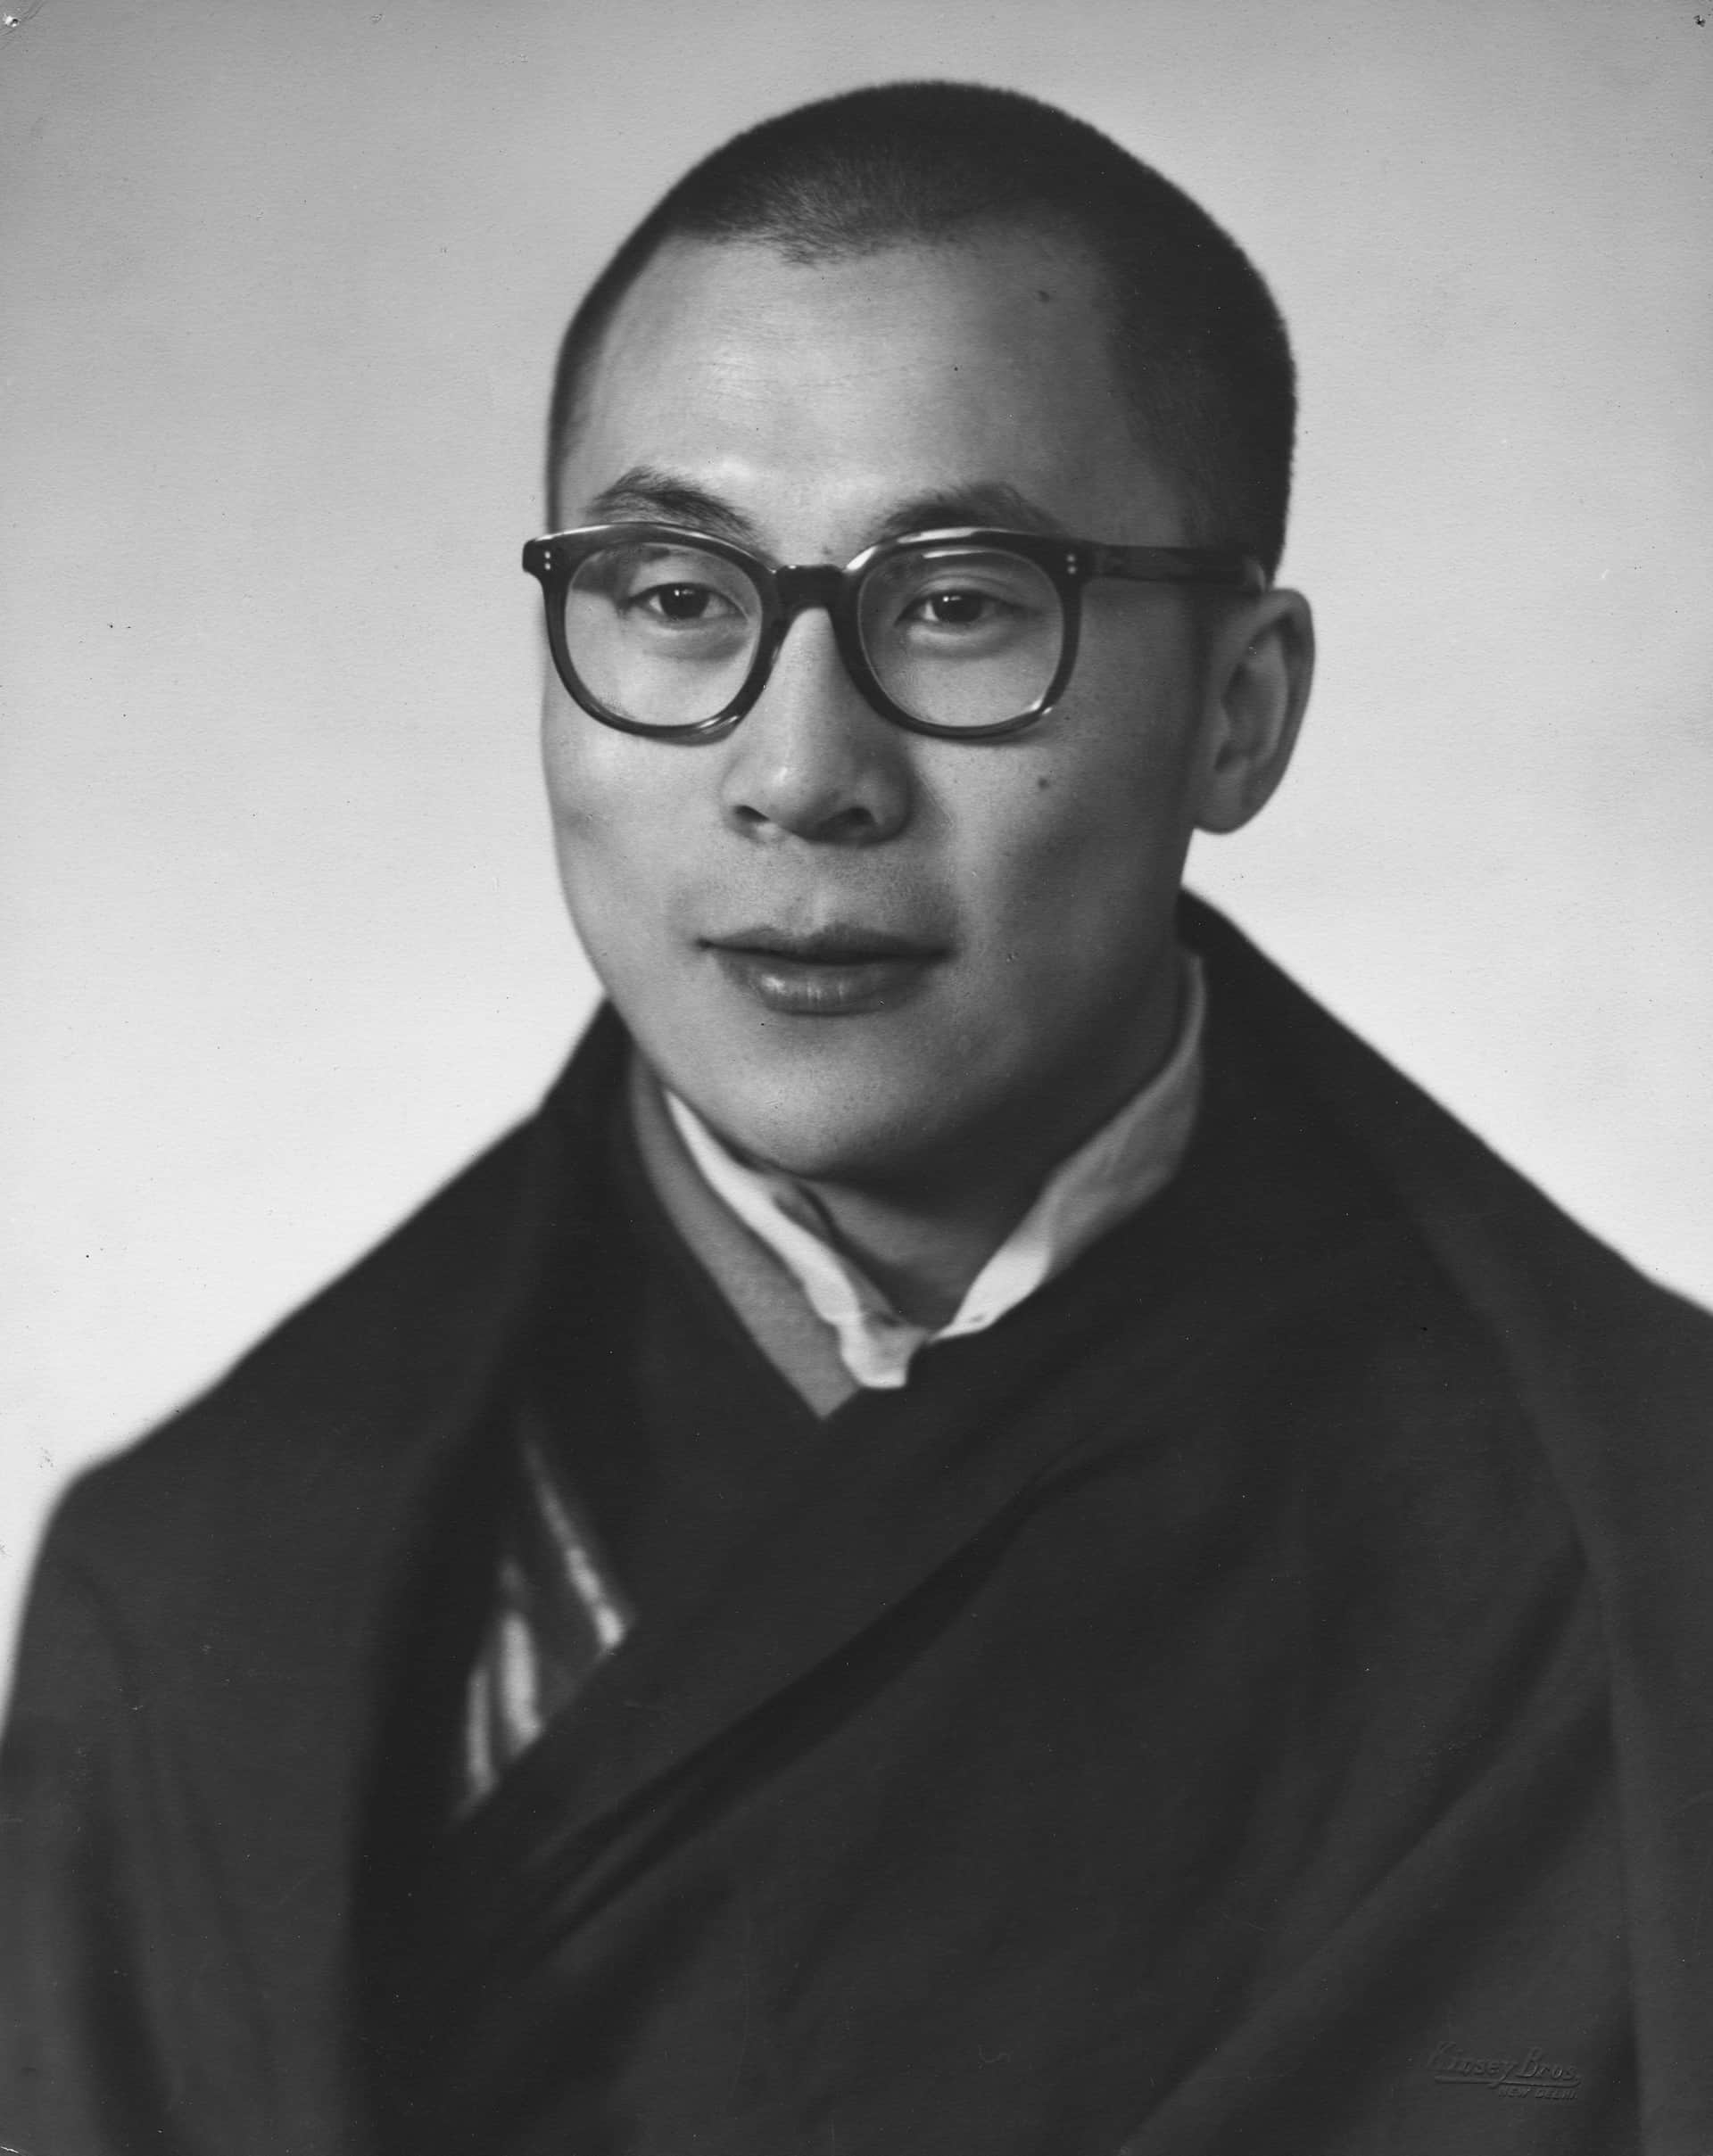 Dalai Lama in 1956 in New Delhi